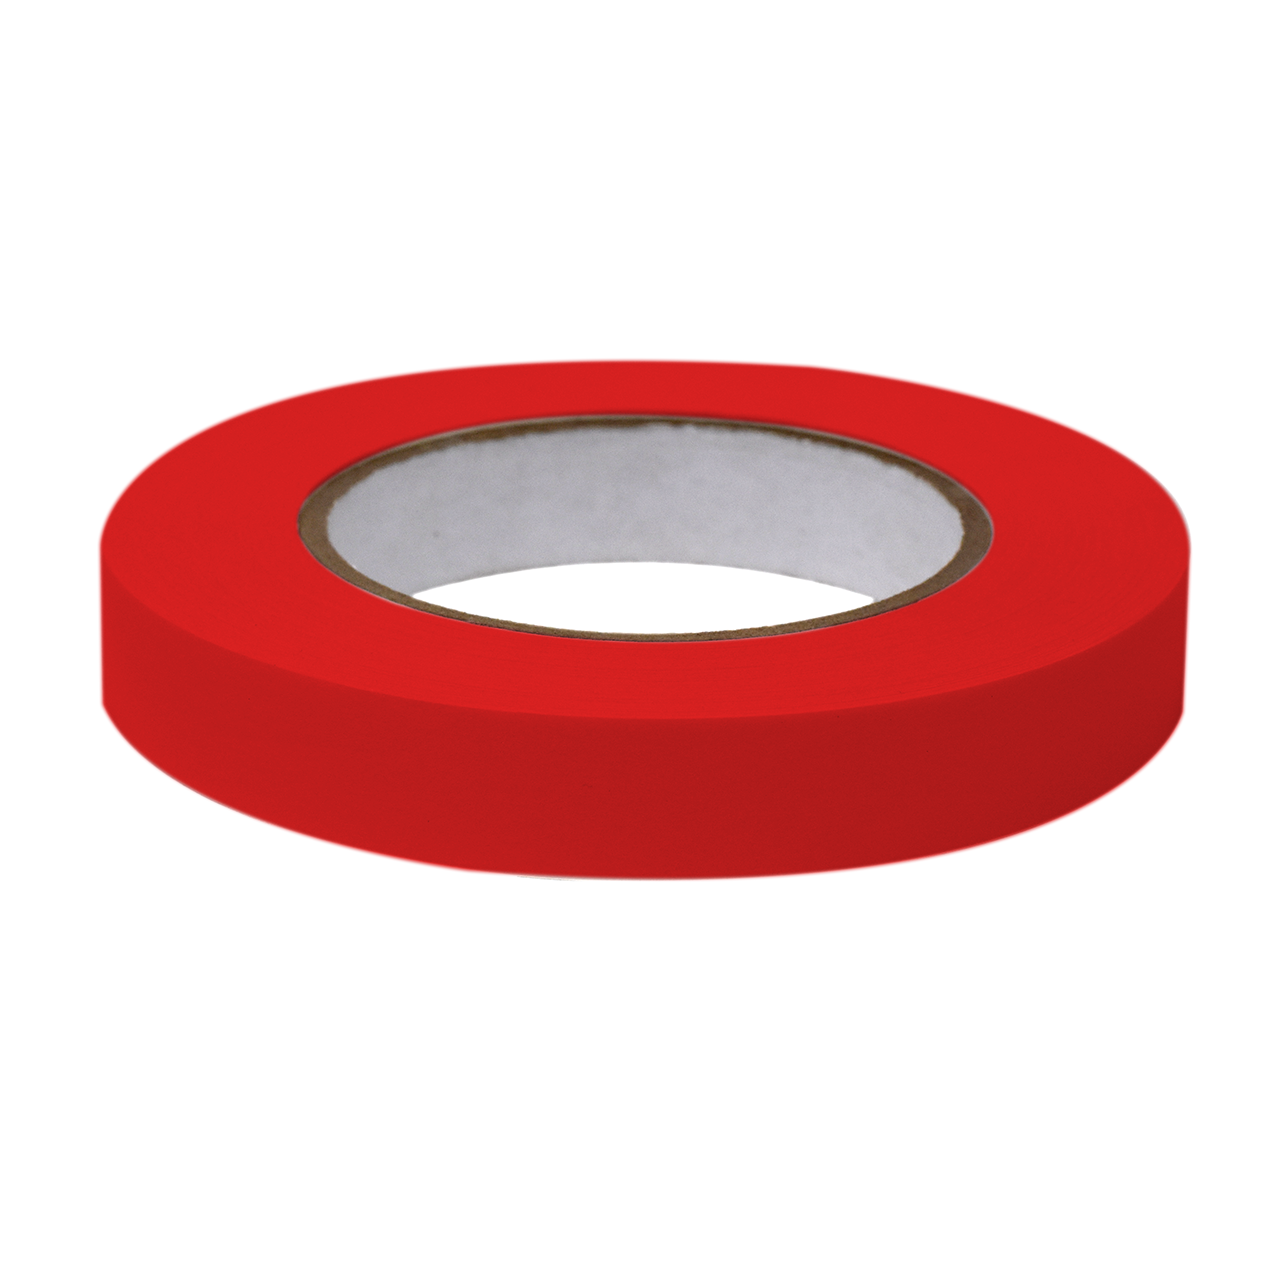 Globe Scientific Labeling Tape, 3/4" x 60yd per Roll, 4 Rolls/Case, Red  